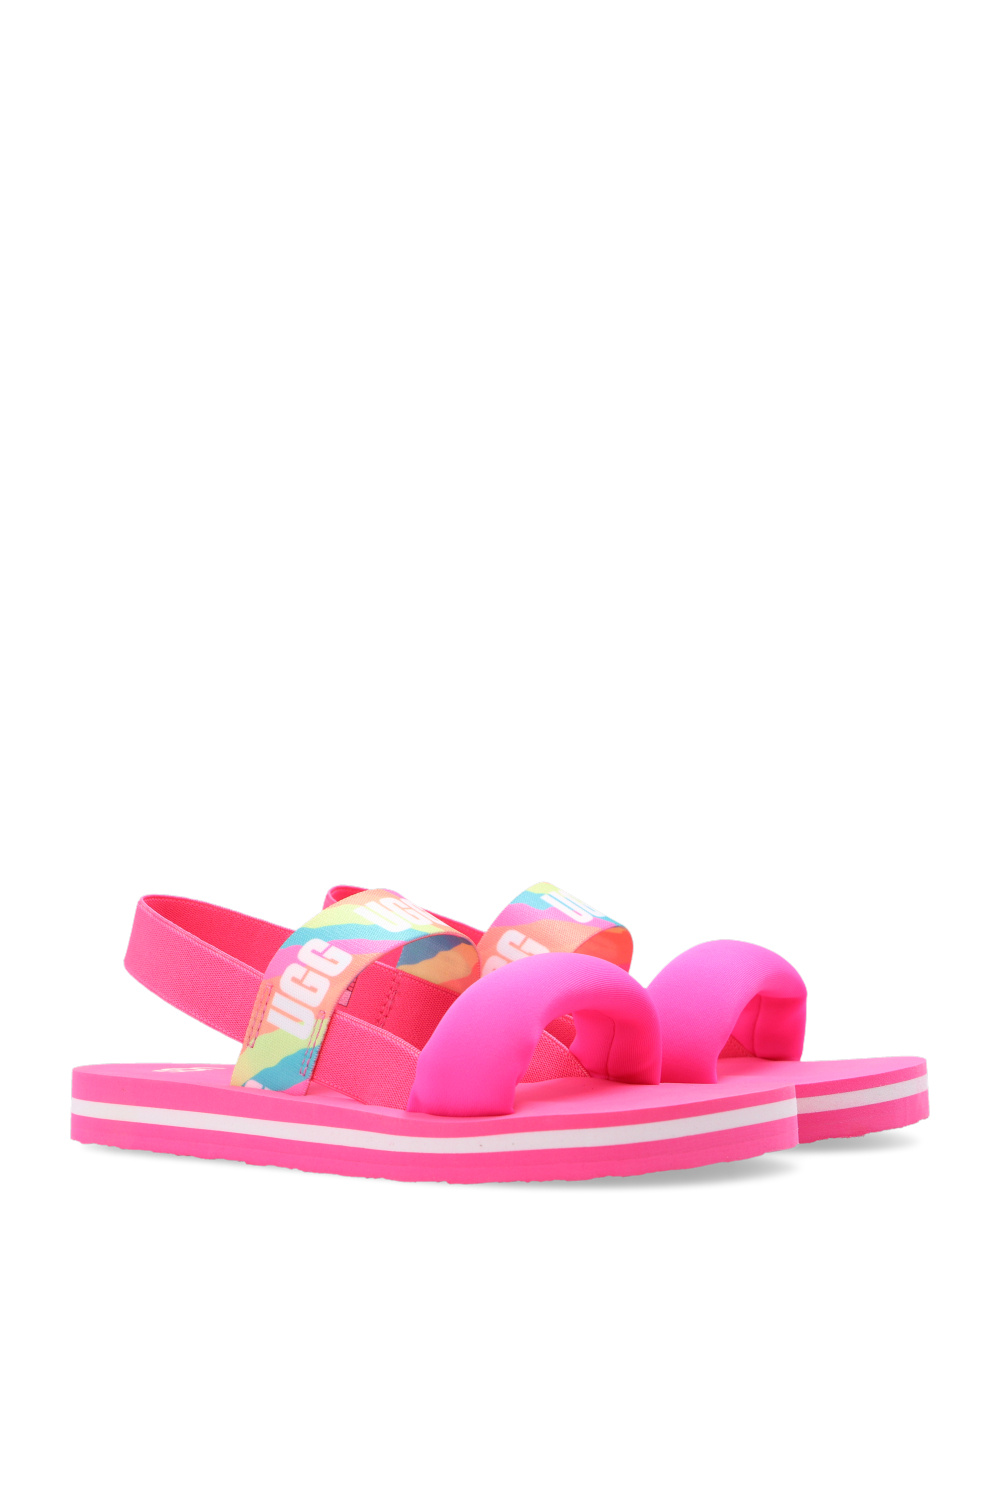 ugg Slipper Kids ‘Zuma Sling’ sandals